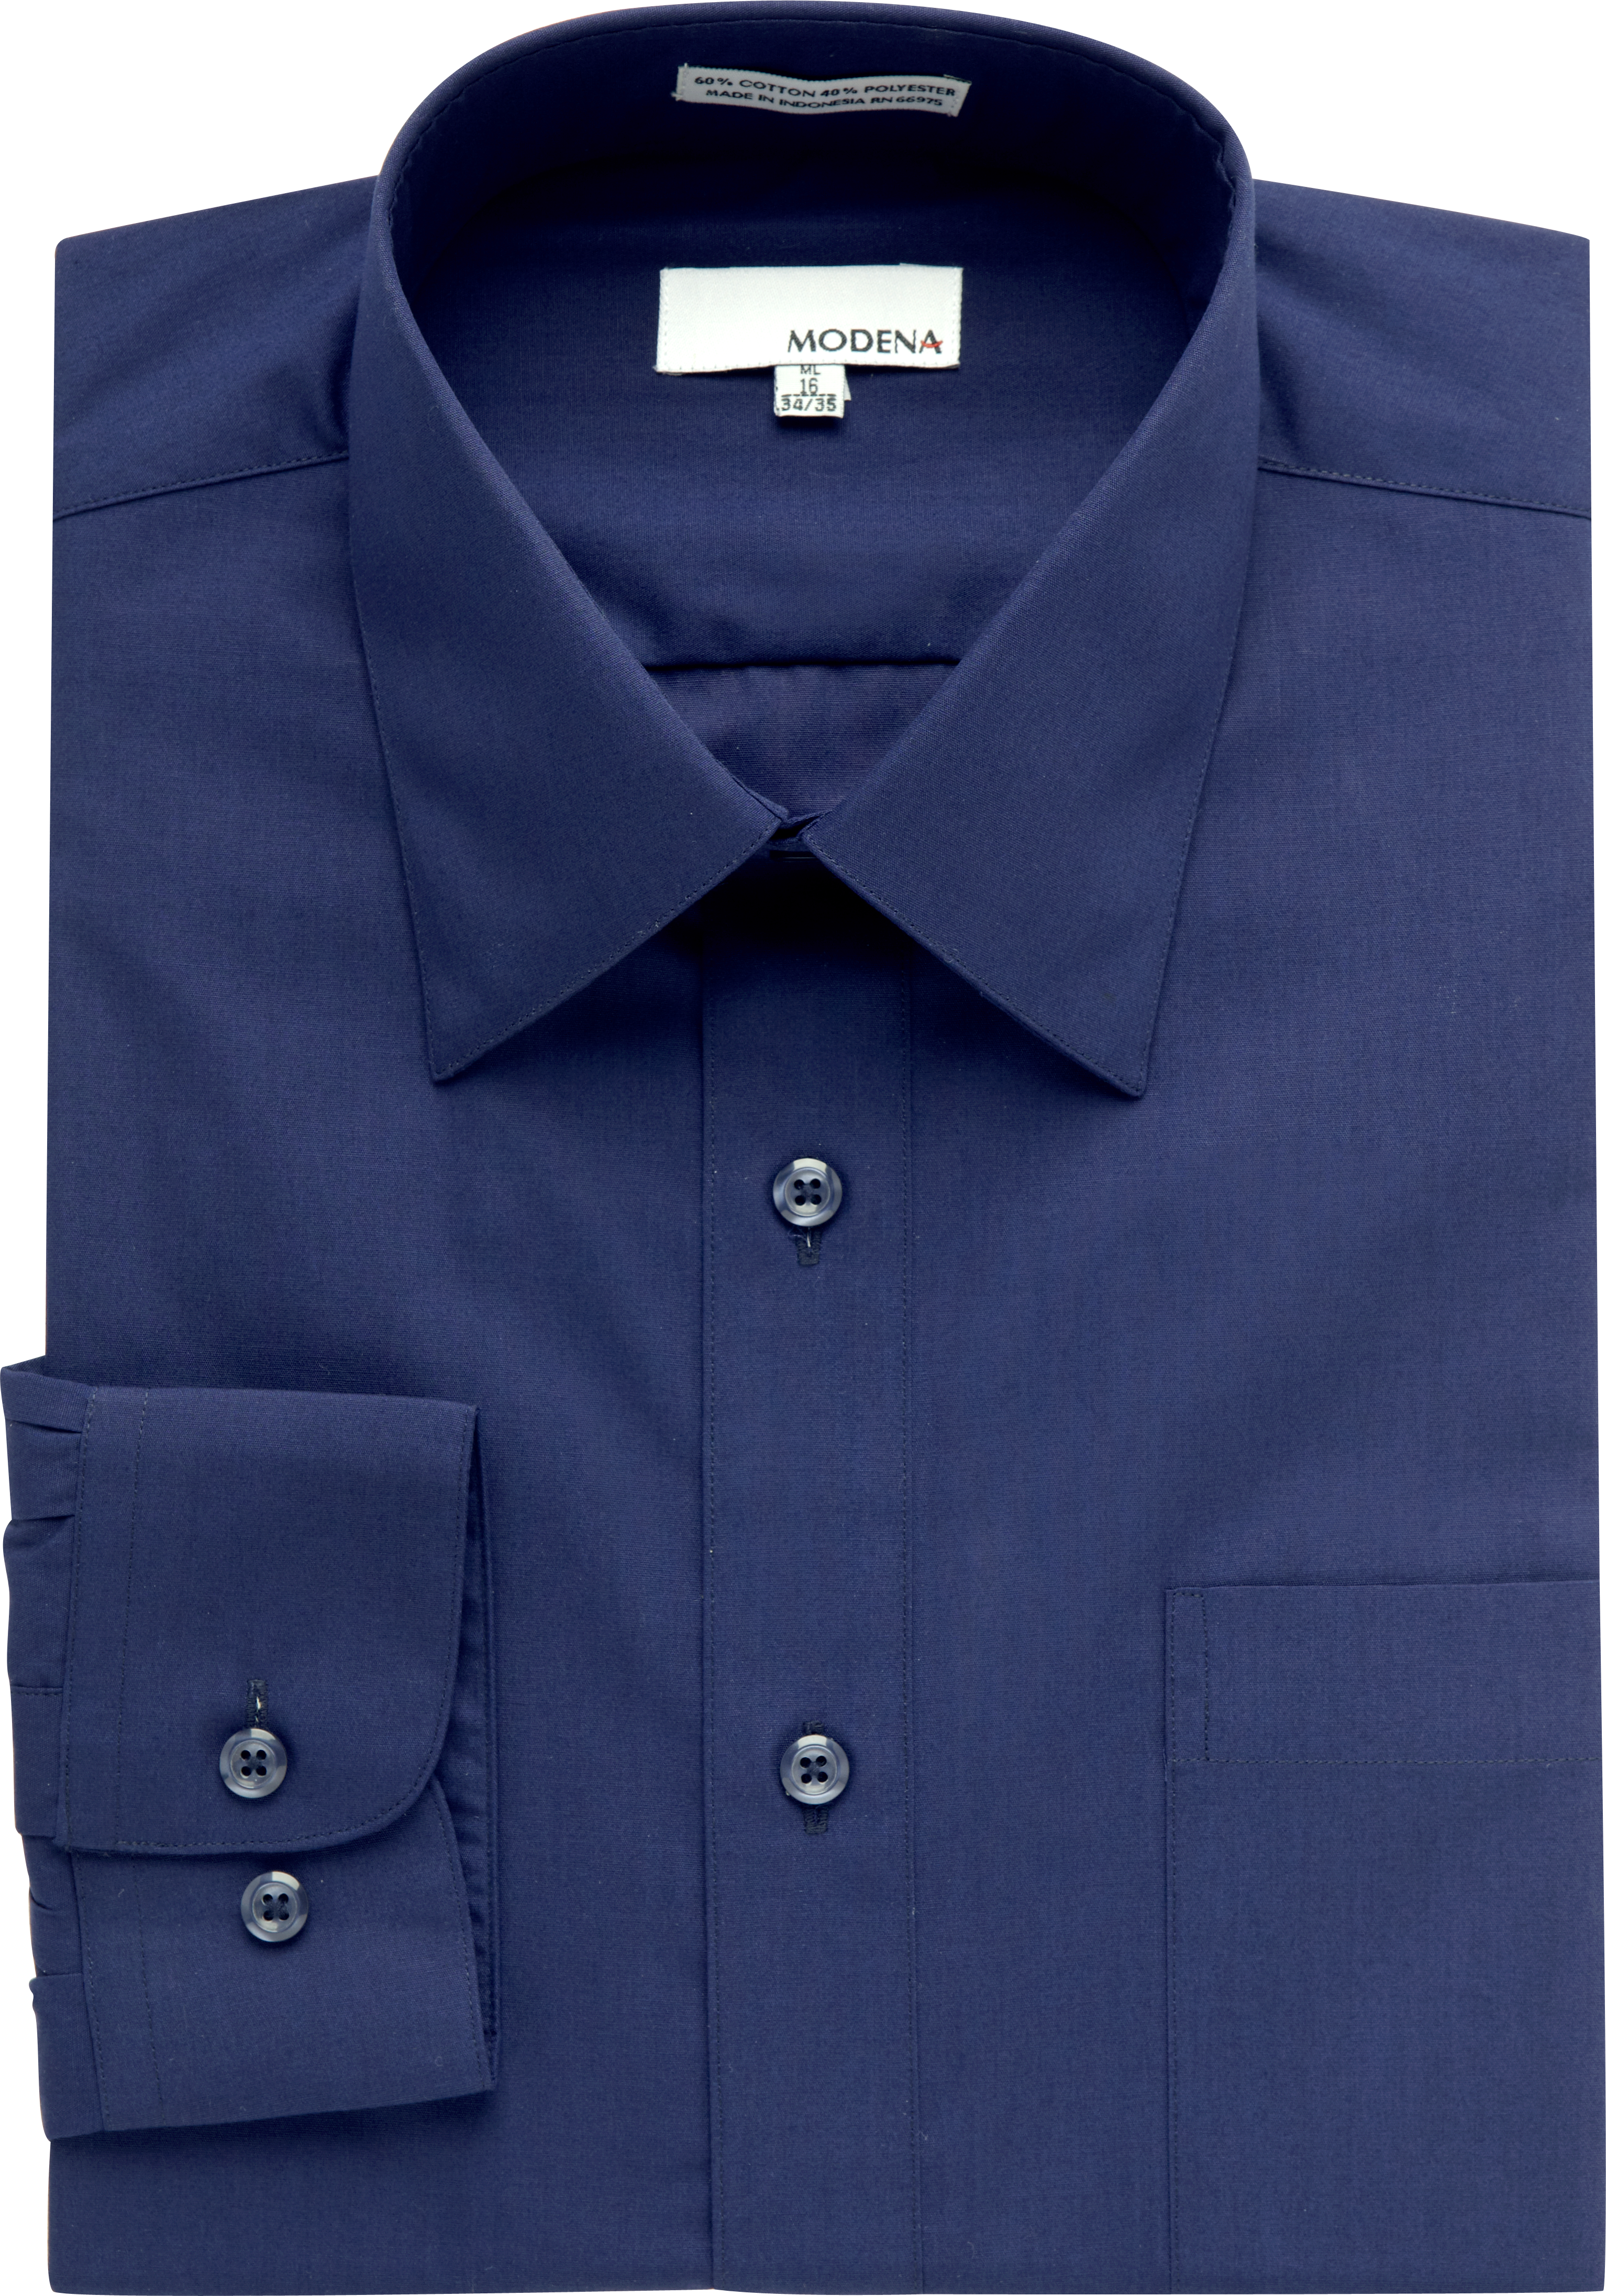 Modena Royal Blue Long Sleeve Dress Shirt